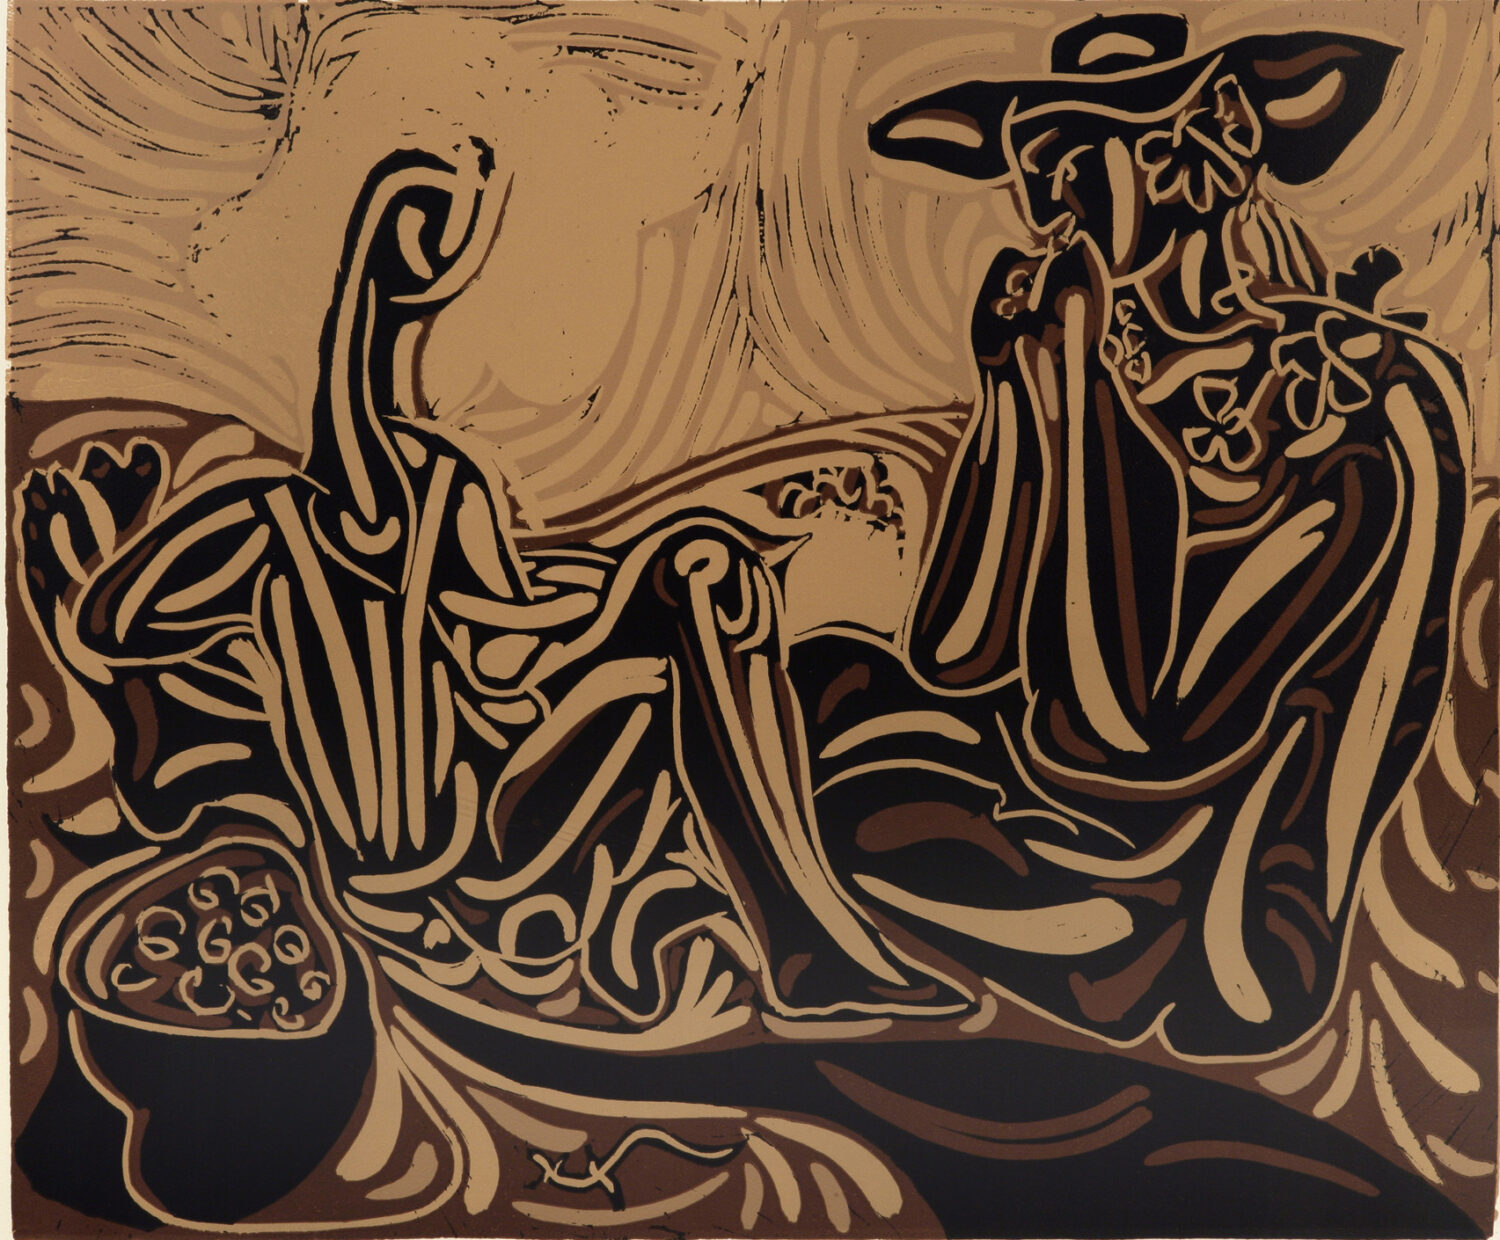 thumbnail of Lino-cut by Pablo Picasso titled Les Vendangeurs.